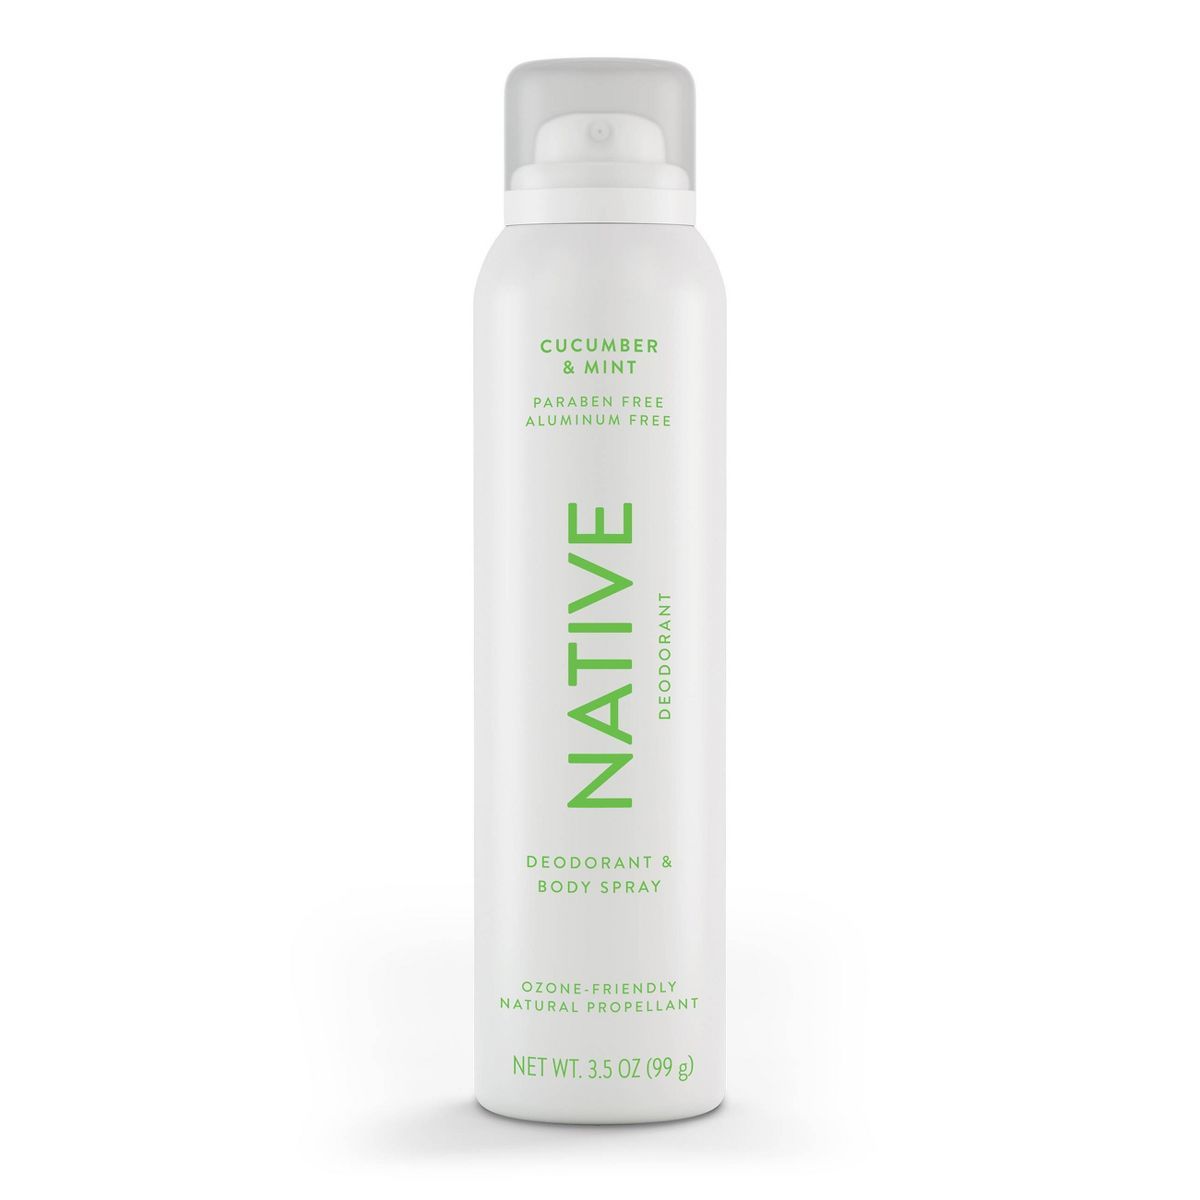 Native Deodorant & Body Spray - Cucumber & Mint - Aluminum Free - 3.5 oz | Target